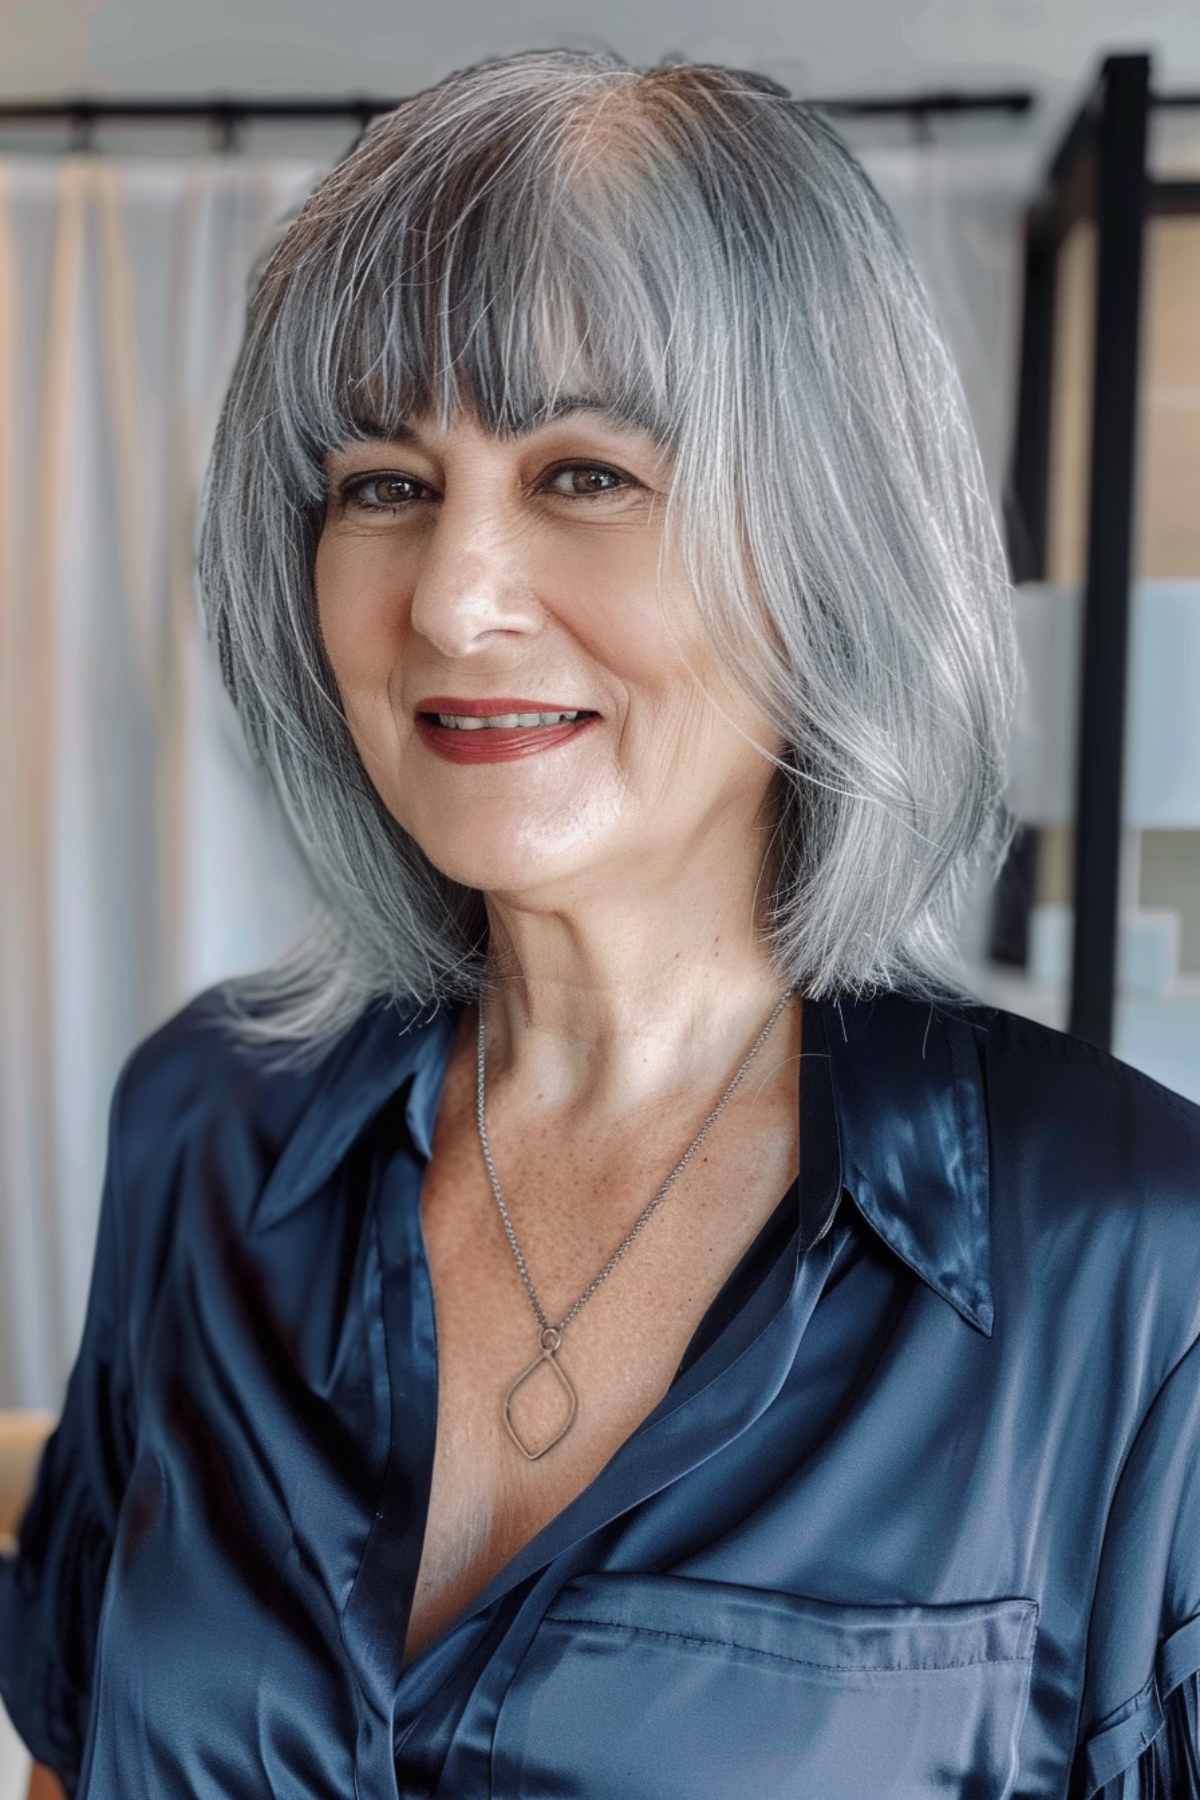 Smiling mature woman with layered grey hair and straight bangs, wearing a dark blue satin shirt.